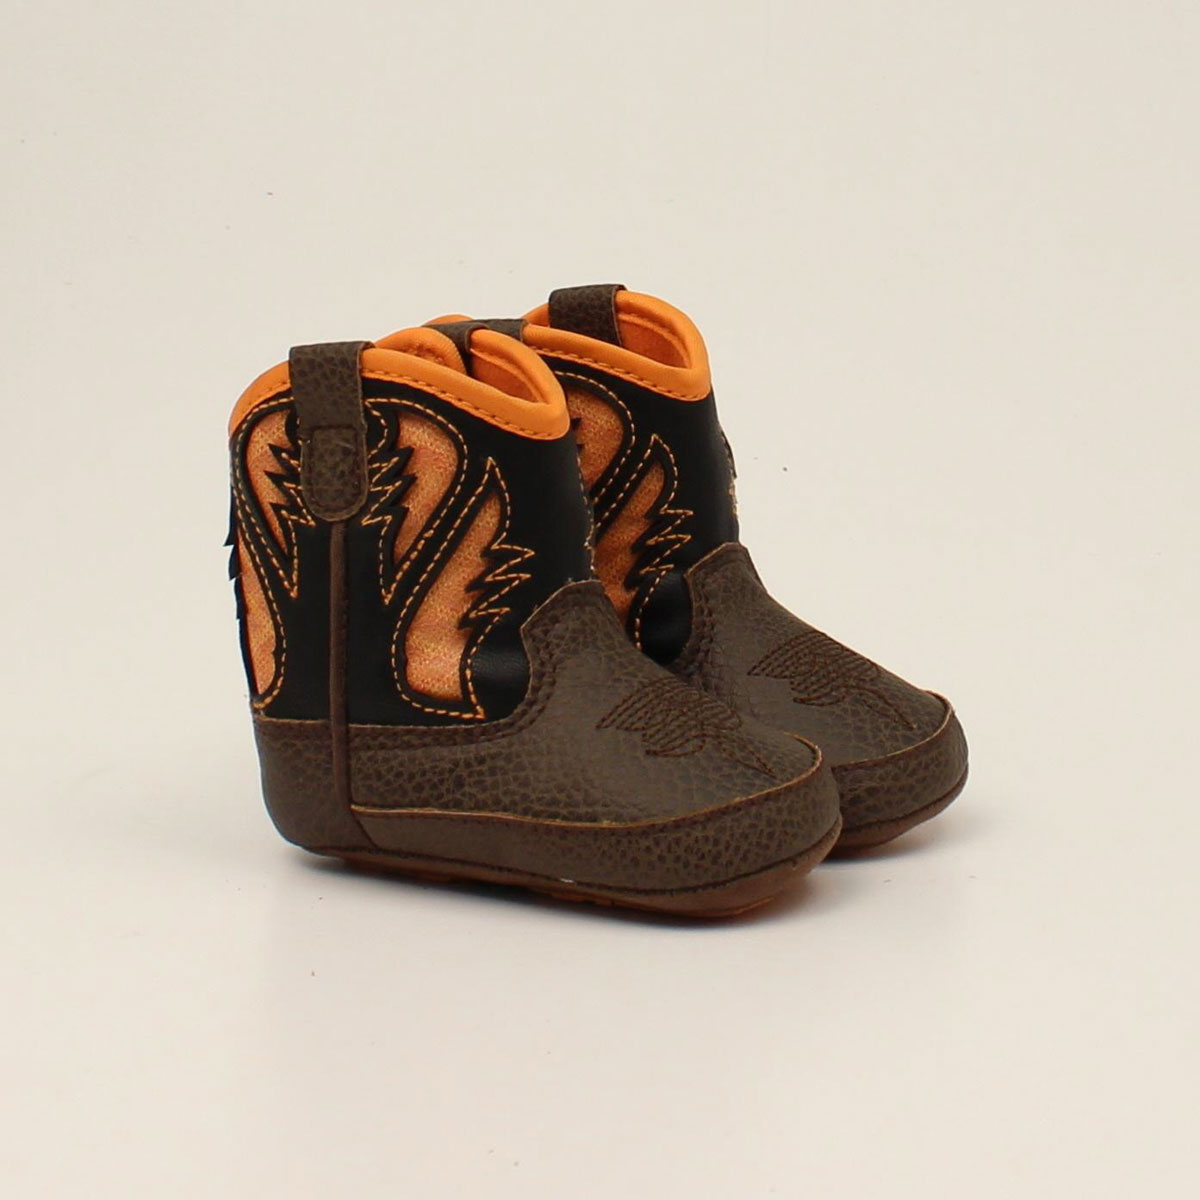 Ariat Infant Boy's WorkHog Lil' Stompers Boots - Brown w/Orange